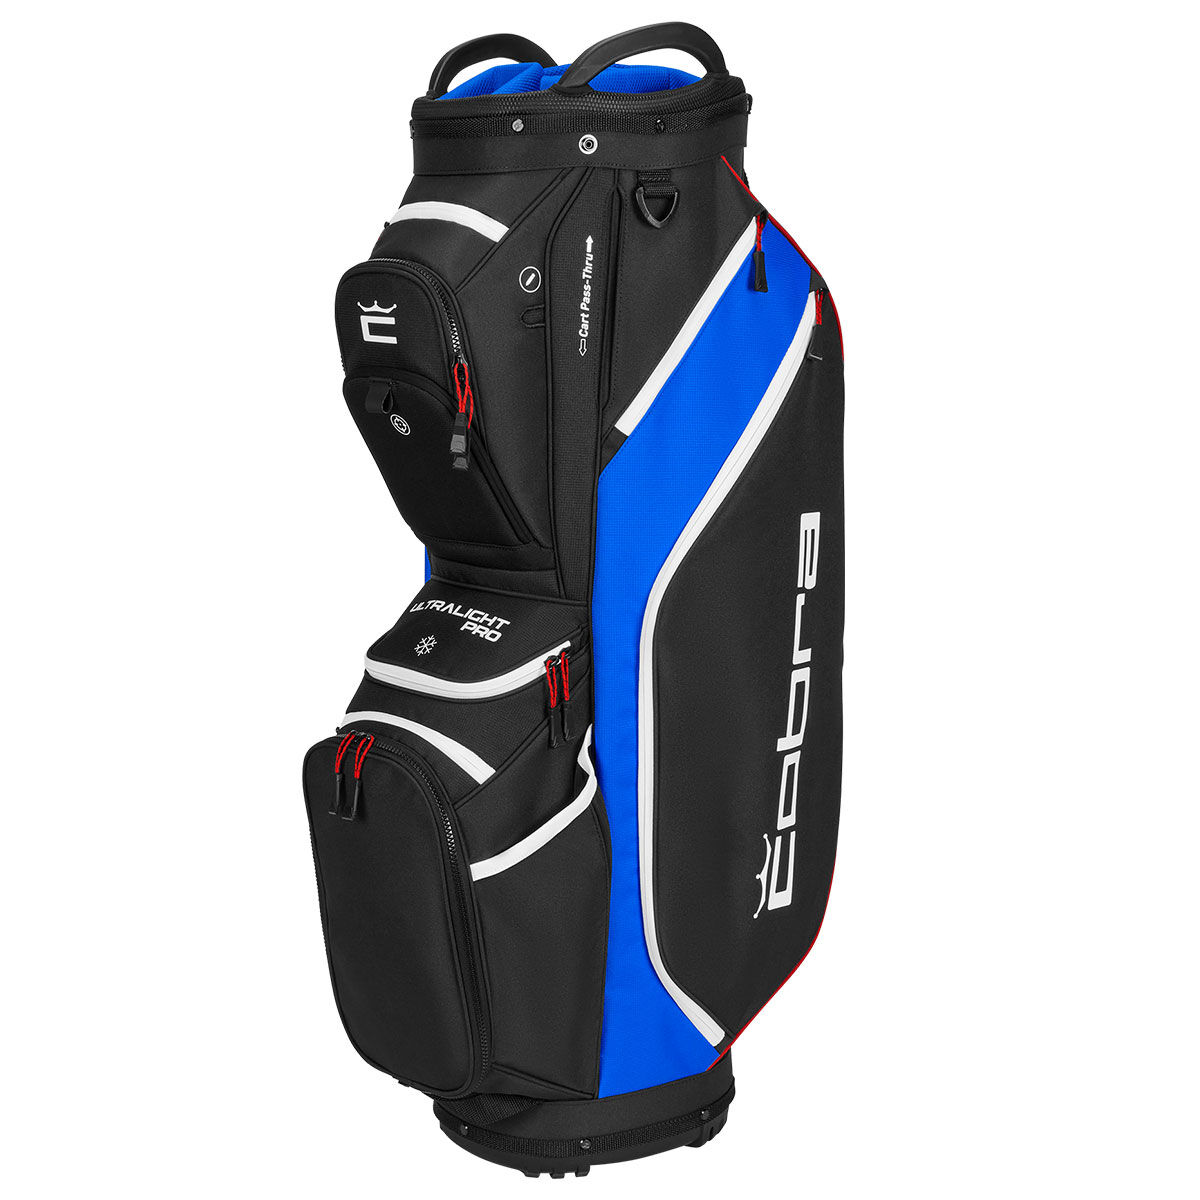 COBRA ULTRALIGHT Pro Lightweight Golf Cart Bag, Black/electric blue | American Golf